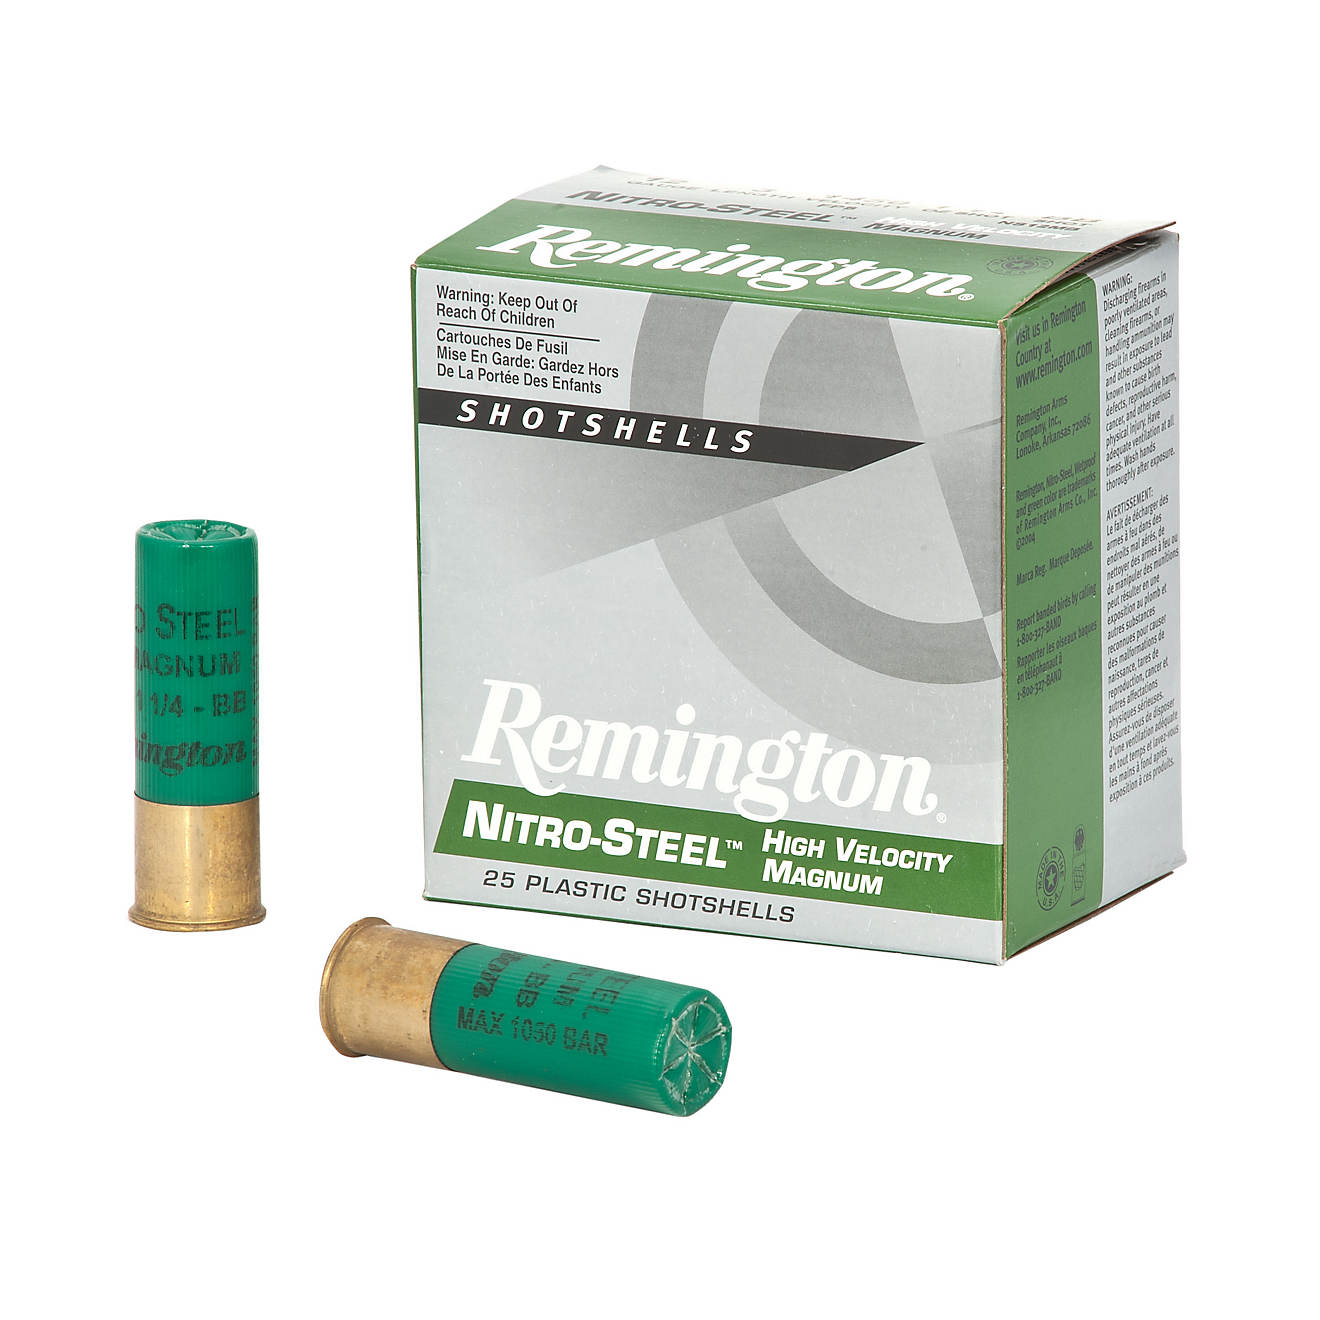 500rds of Remington Nitro Steel High-Velocity 12 Gauge Shotshells